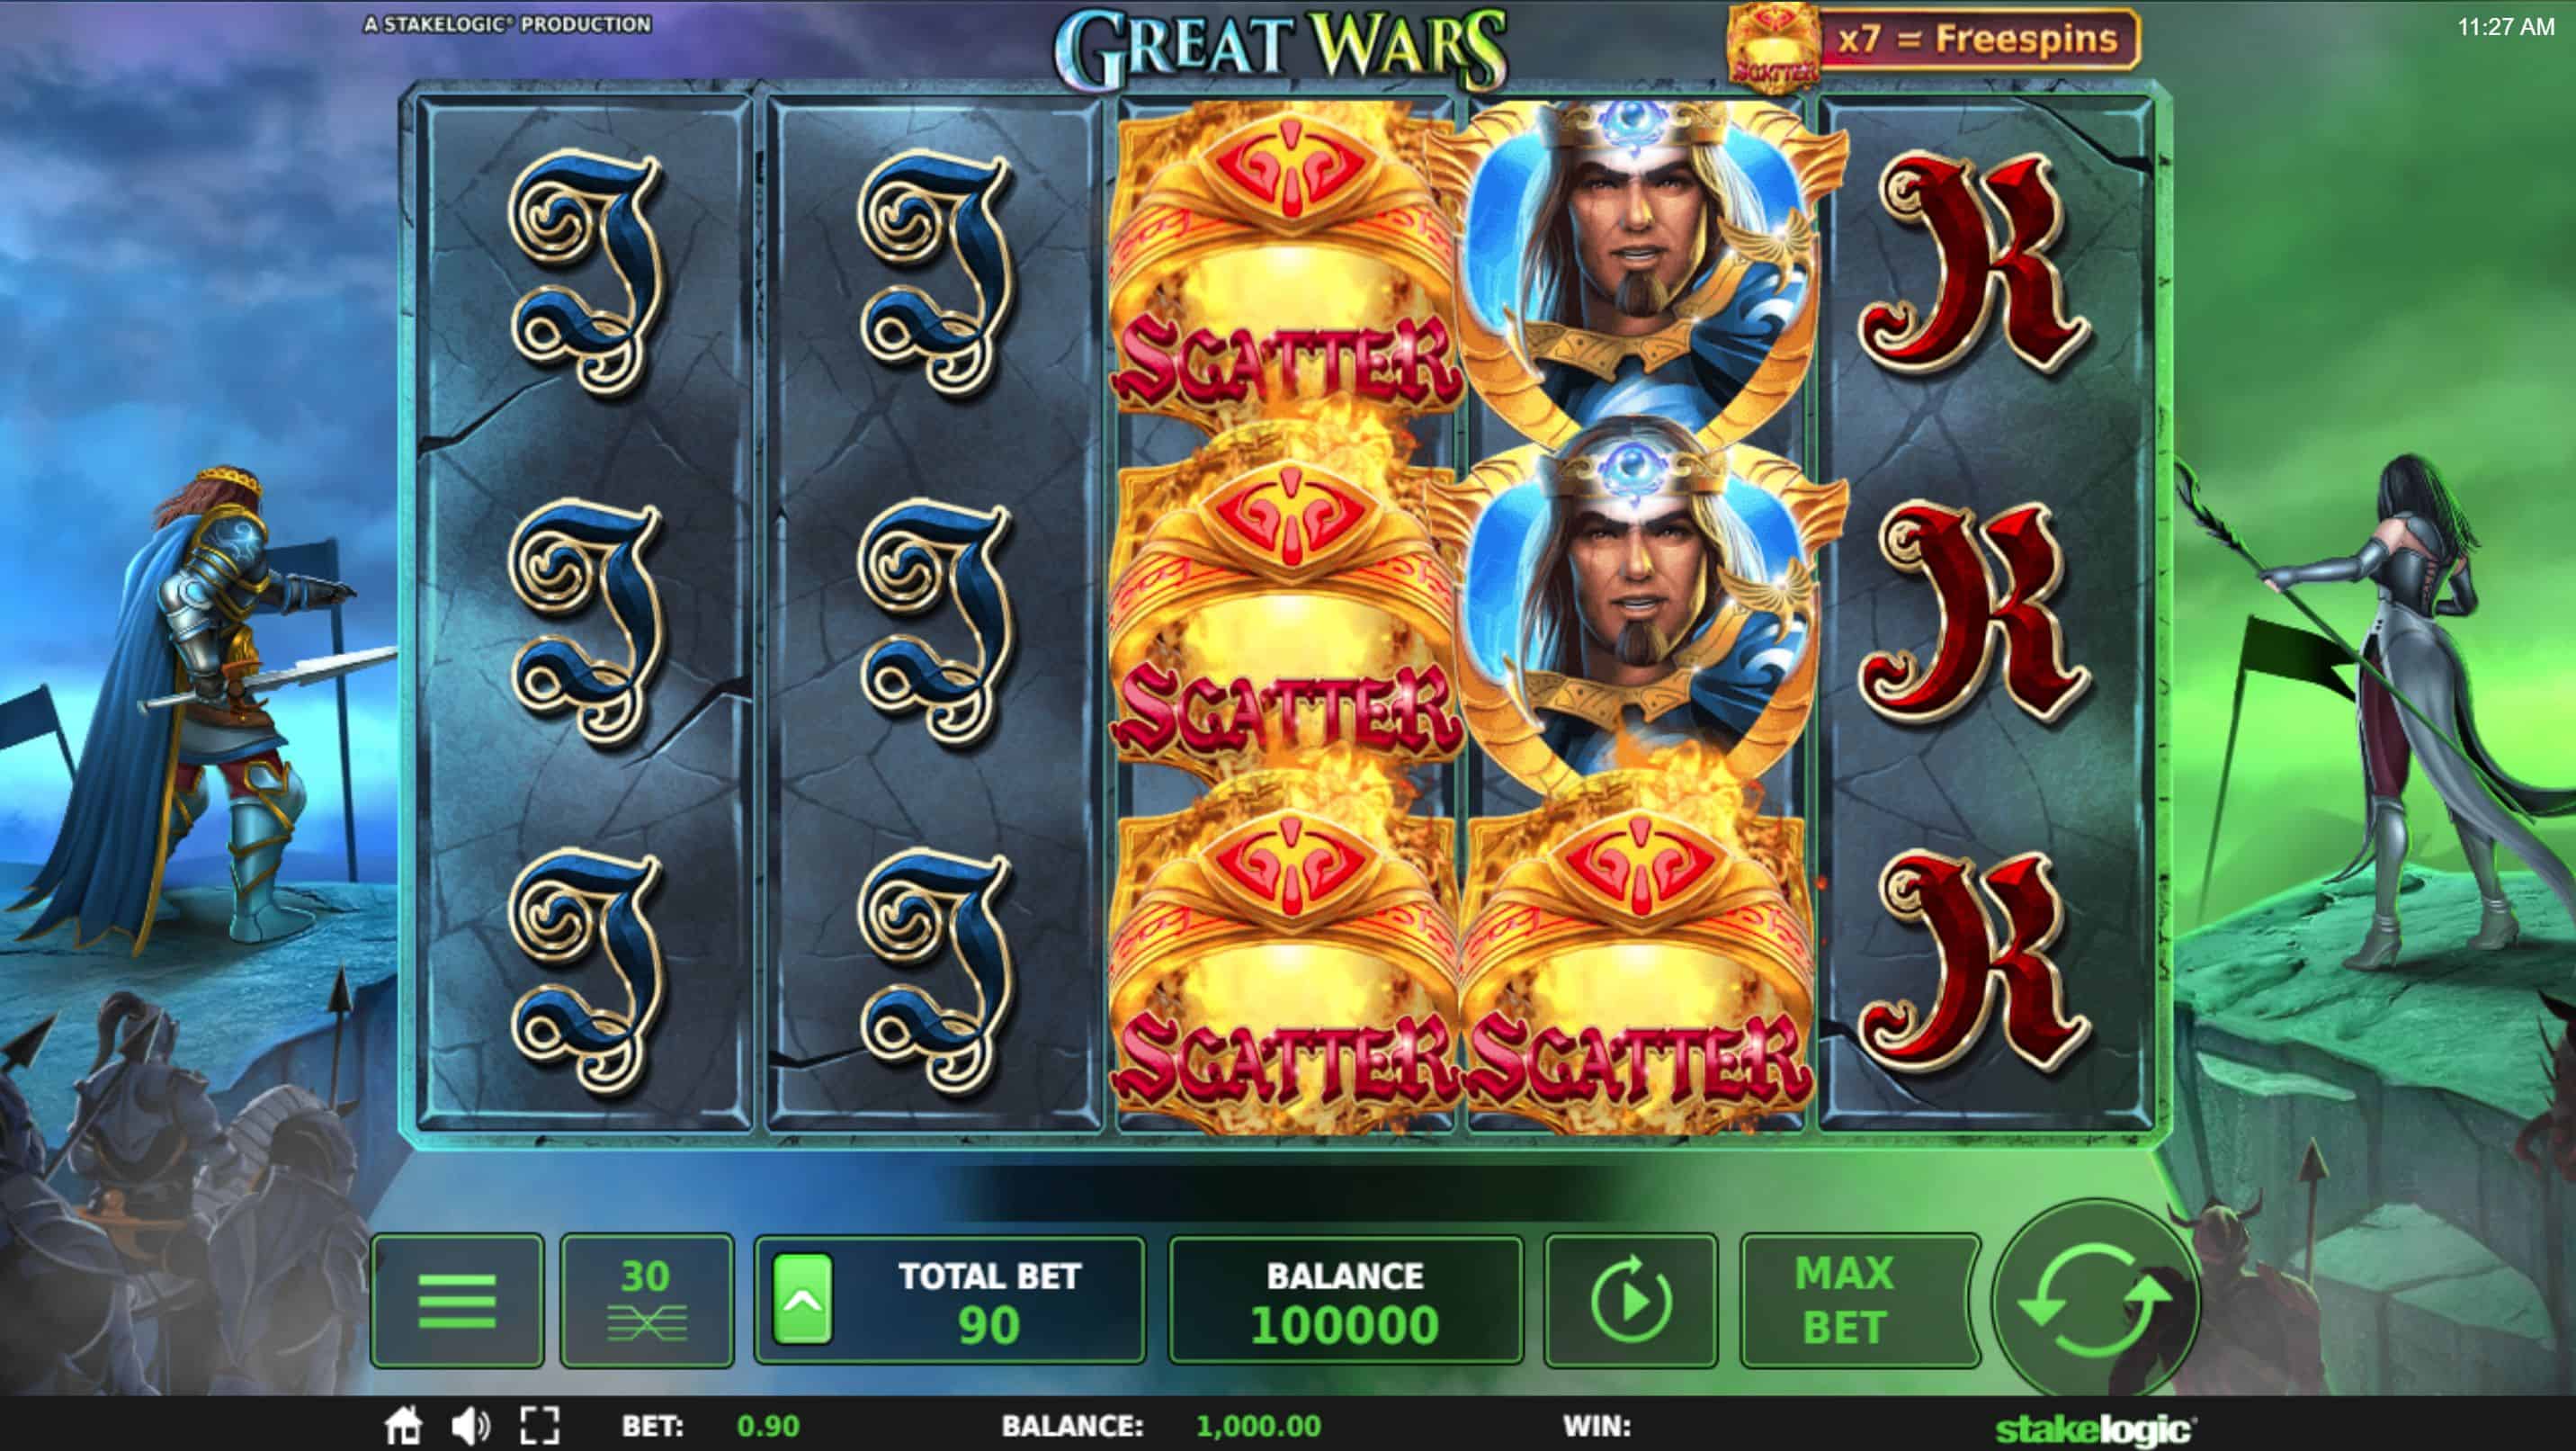 Great Wars Slot Game Free Play at Casino Ireland 01